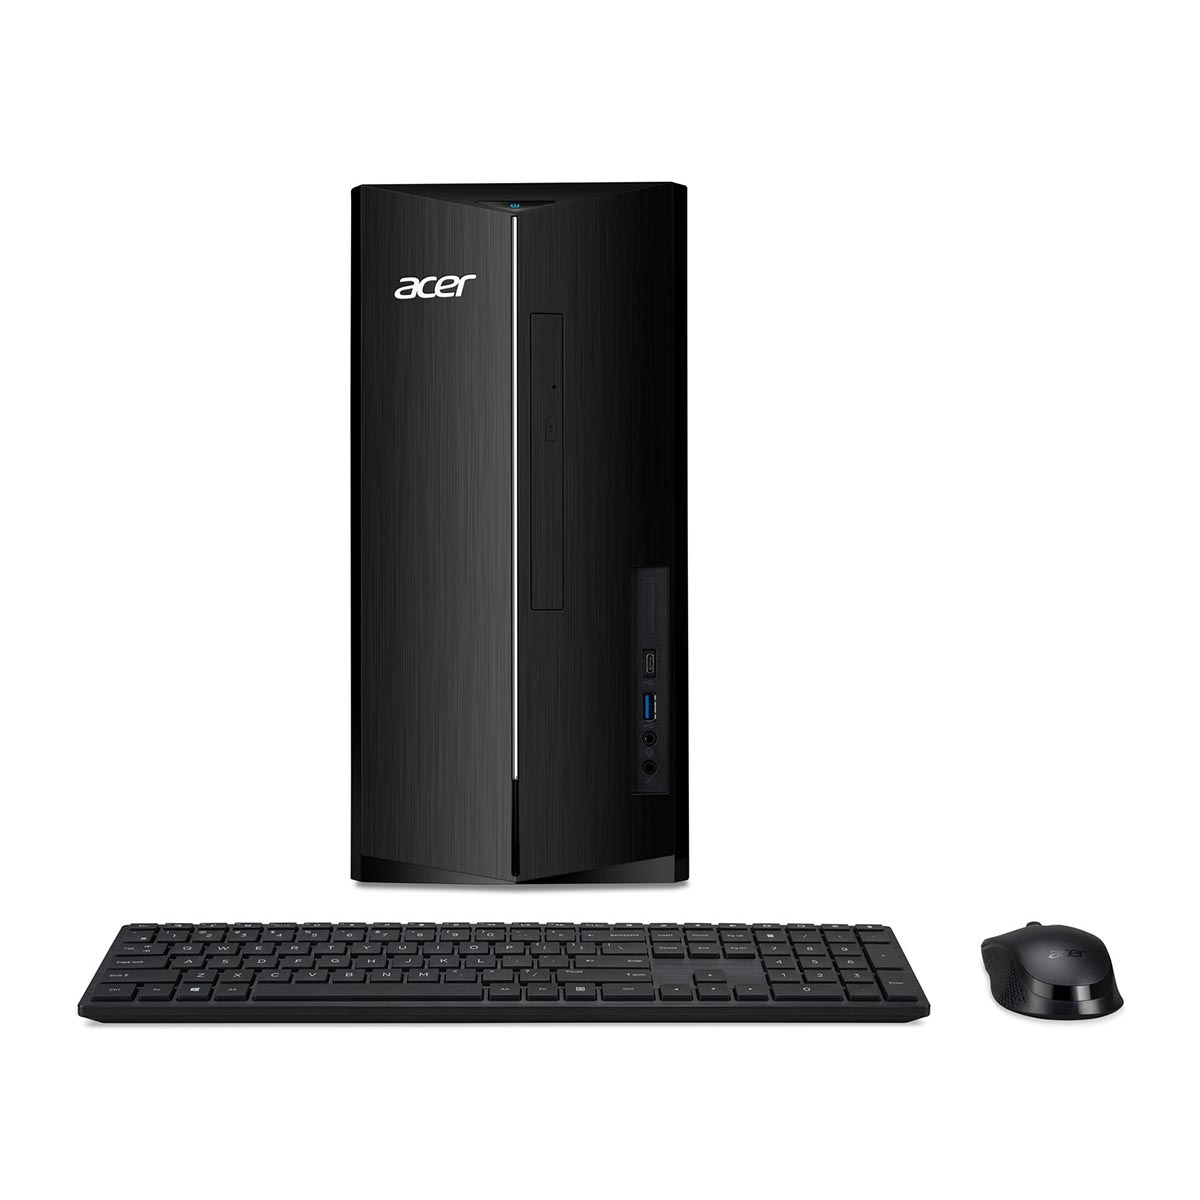 Acer Aspire TC-1760 Tower Desktop Intel i5 12th Gen 8GB RAM 2TB HDD Black